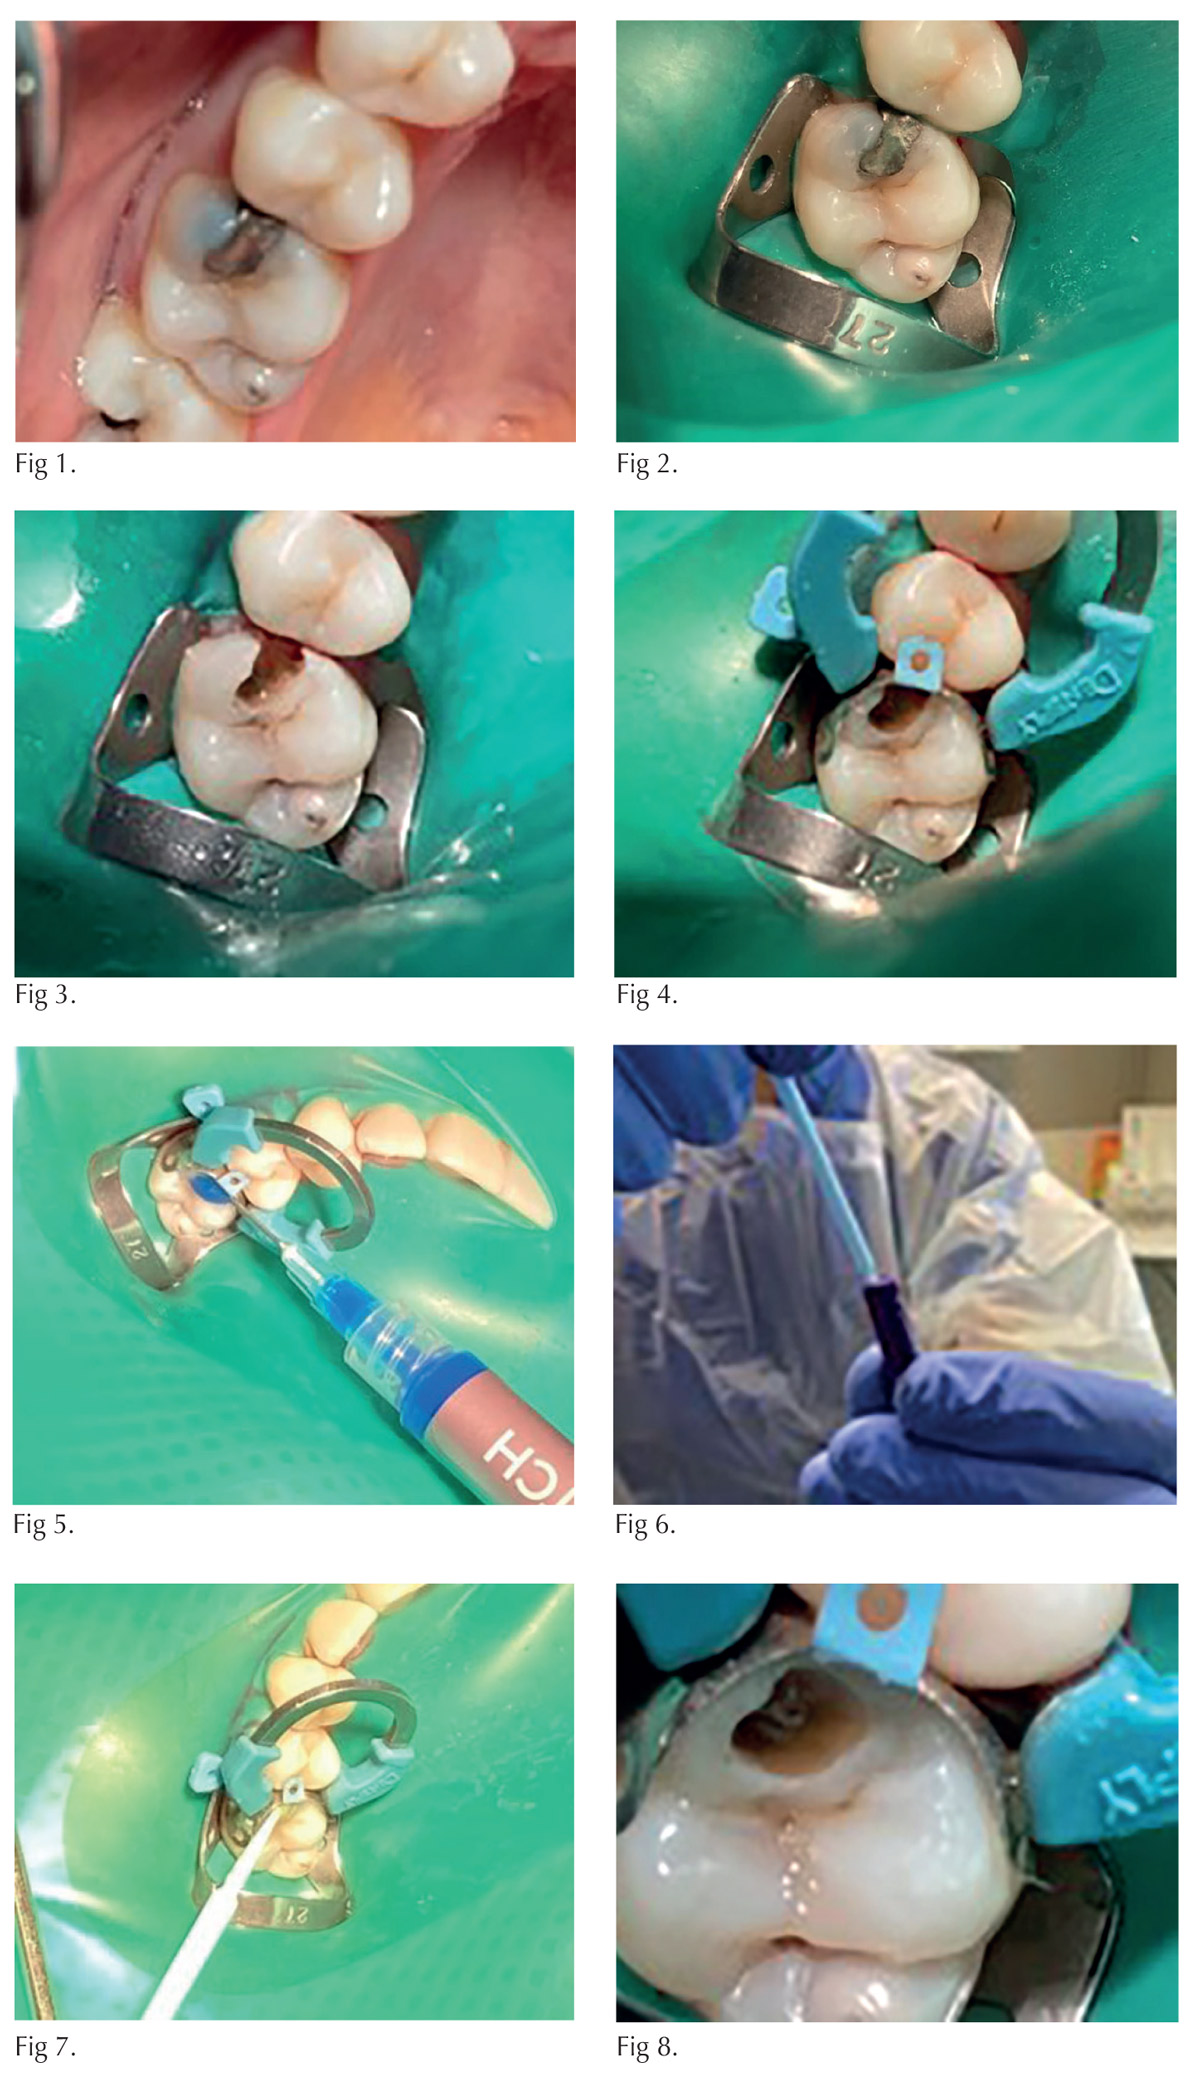 Restoration of maxillary first molar - images 1